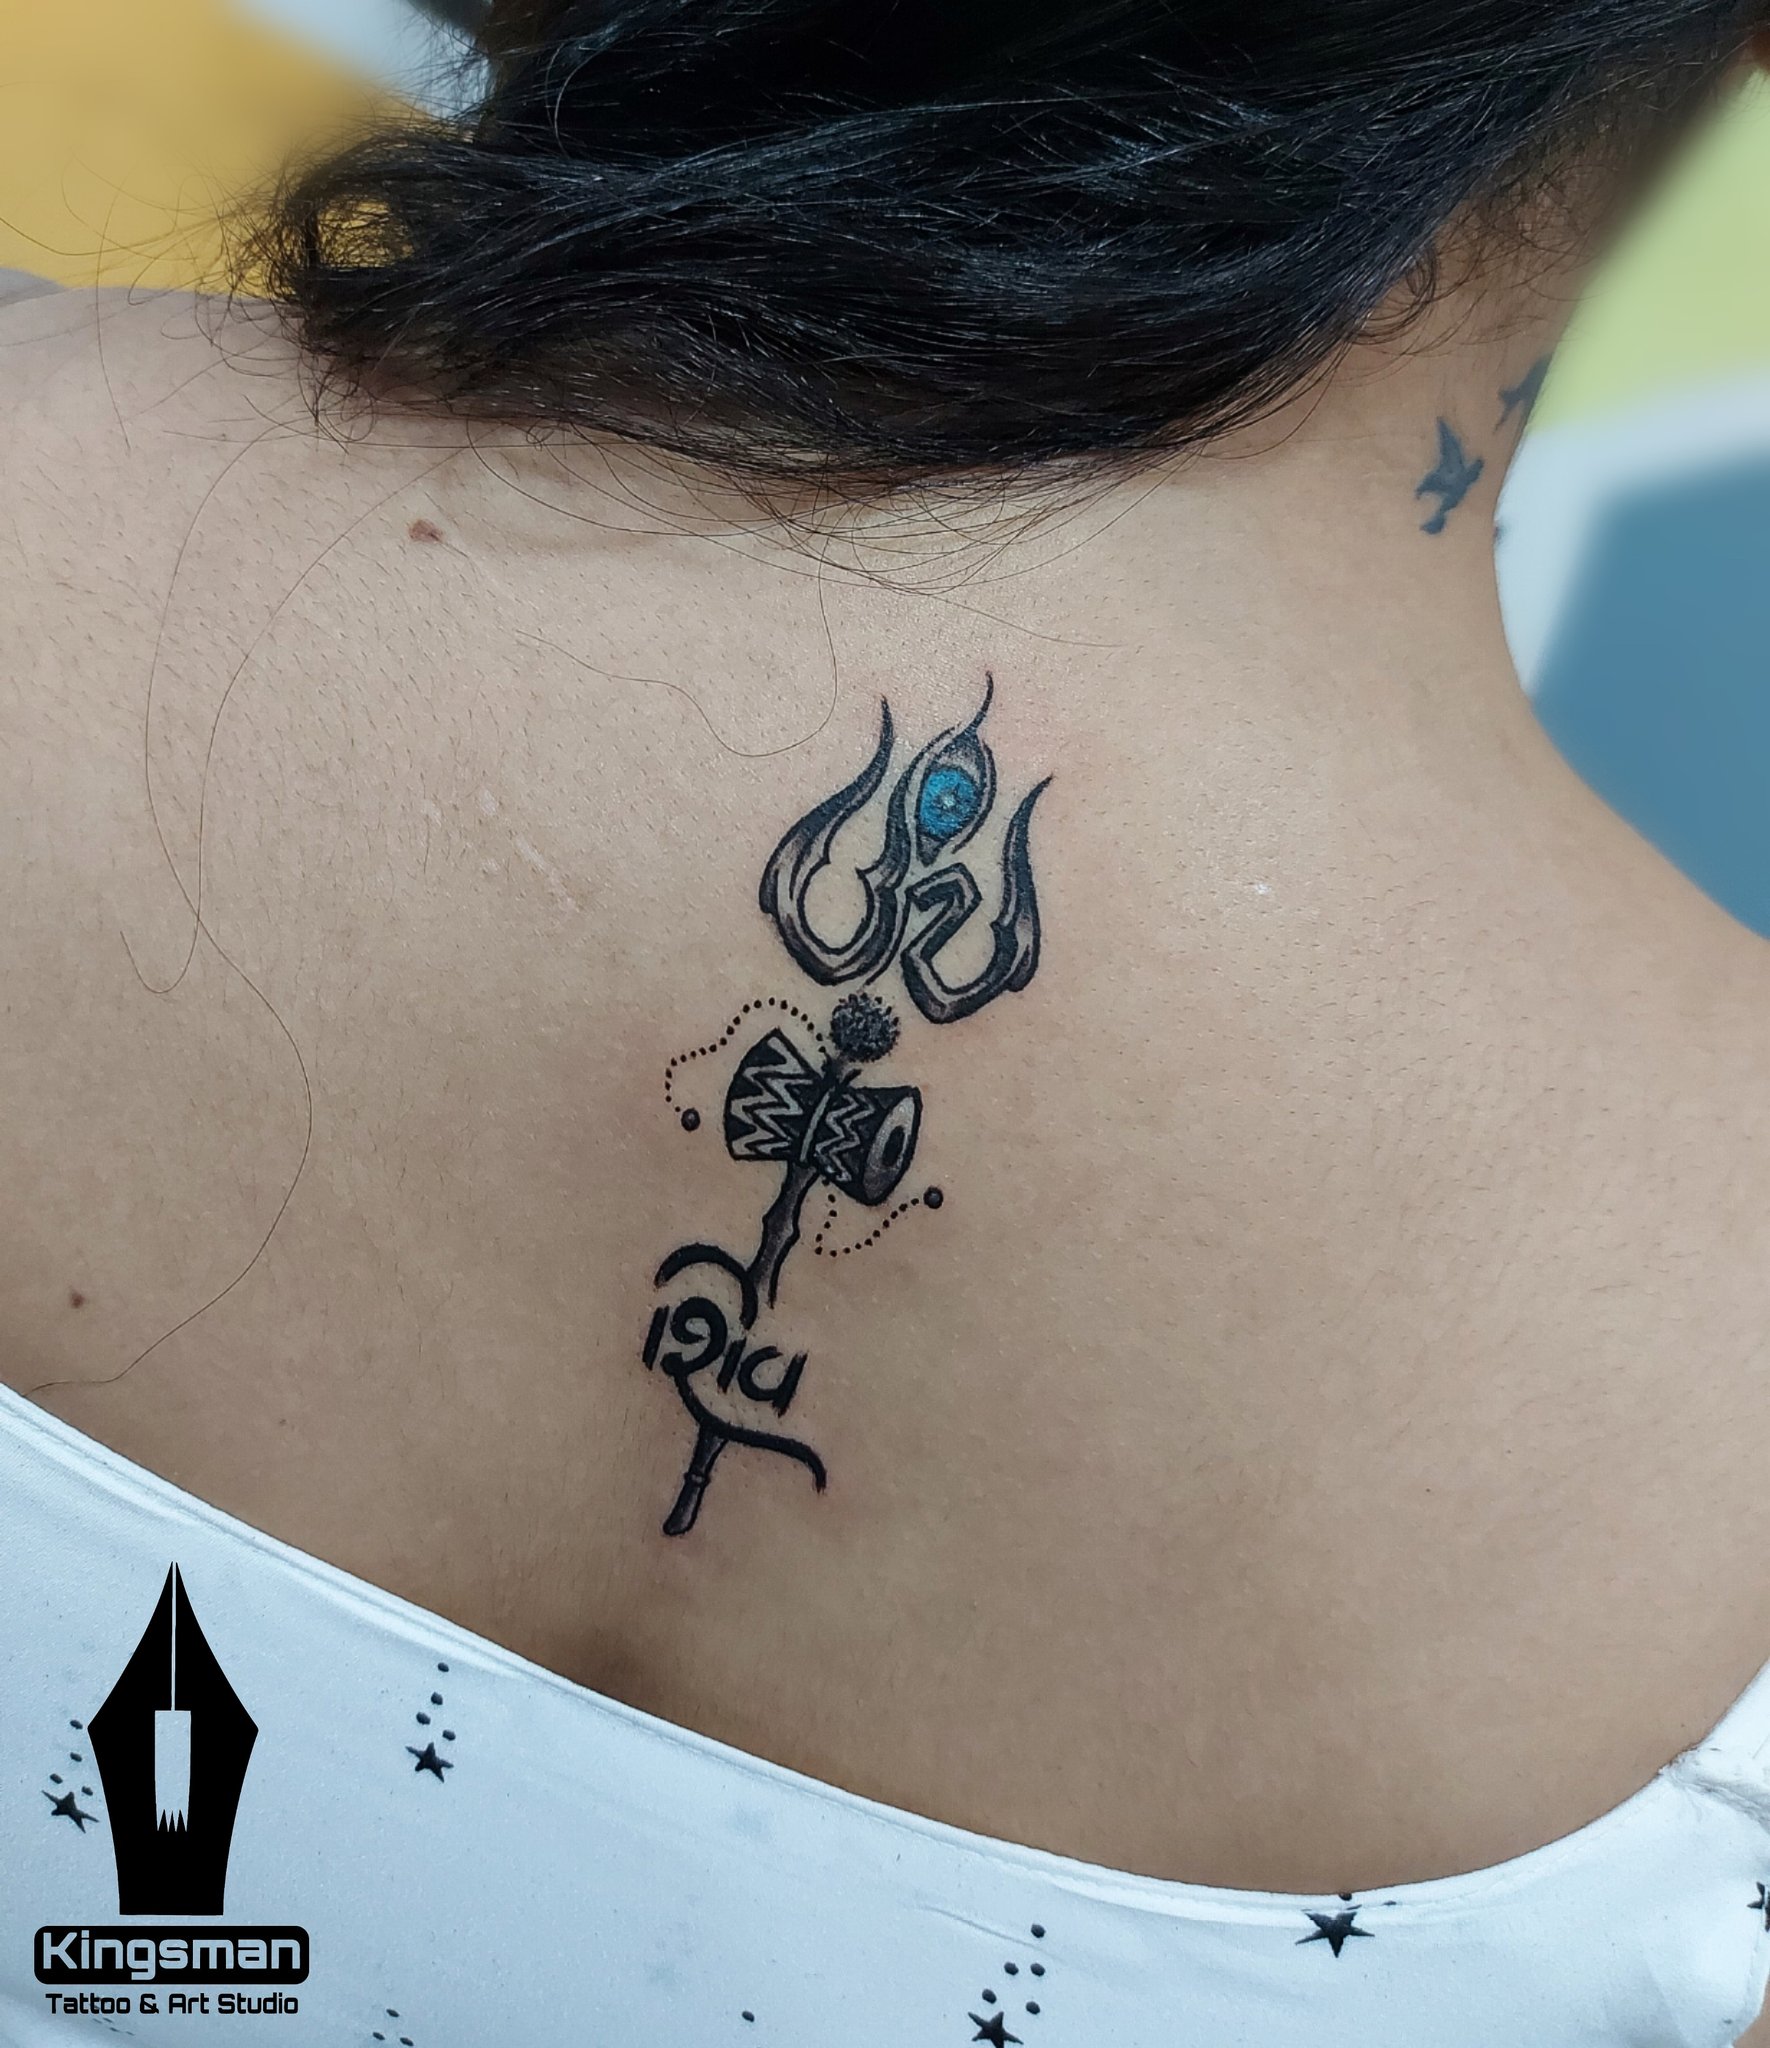 Dynamic Tattoo Studio in Ponda,Goa - Best Tattoo Parlours in Goa - Justdial